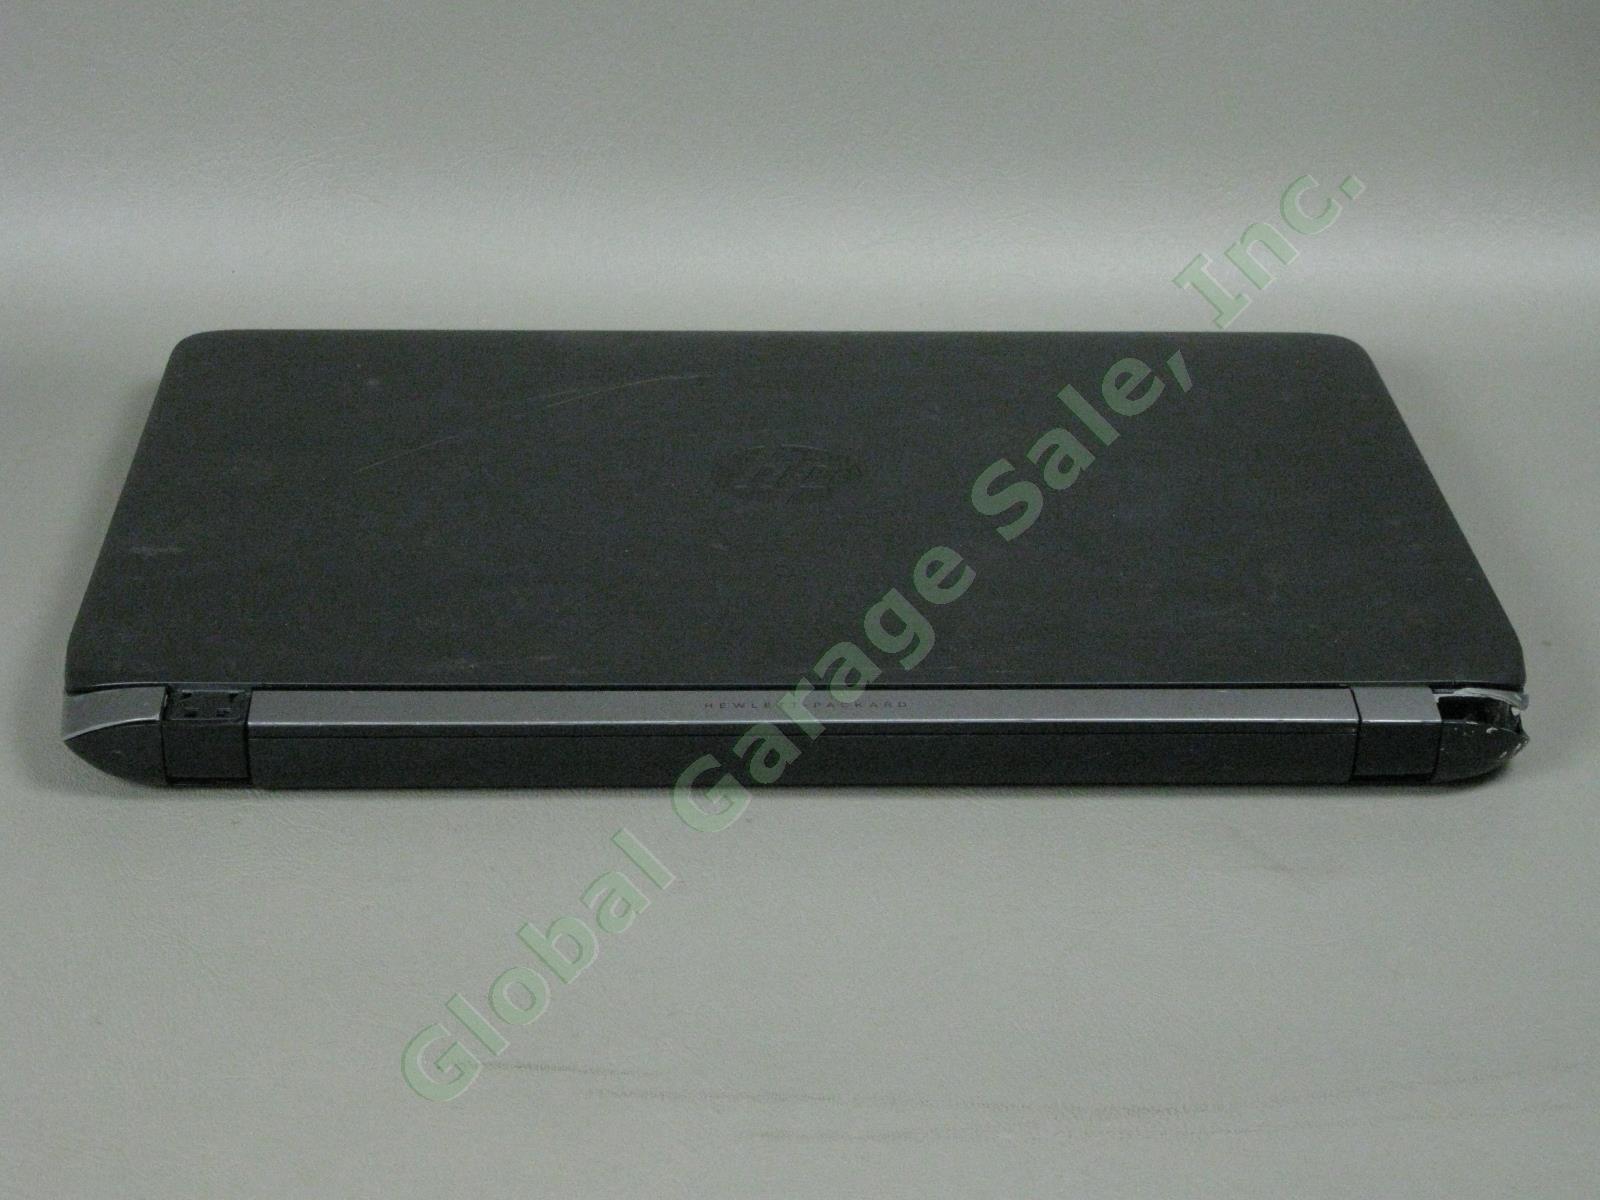 HP ProBook 450 G2 Laptop Computer i5-4210U 2.40GHz 4GB 460GB Win 10 Professional 5